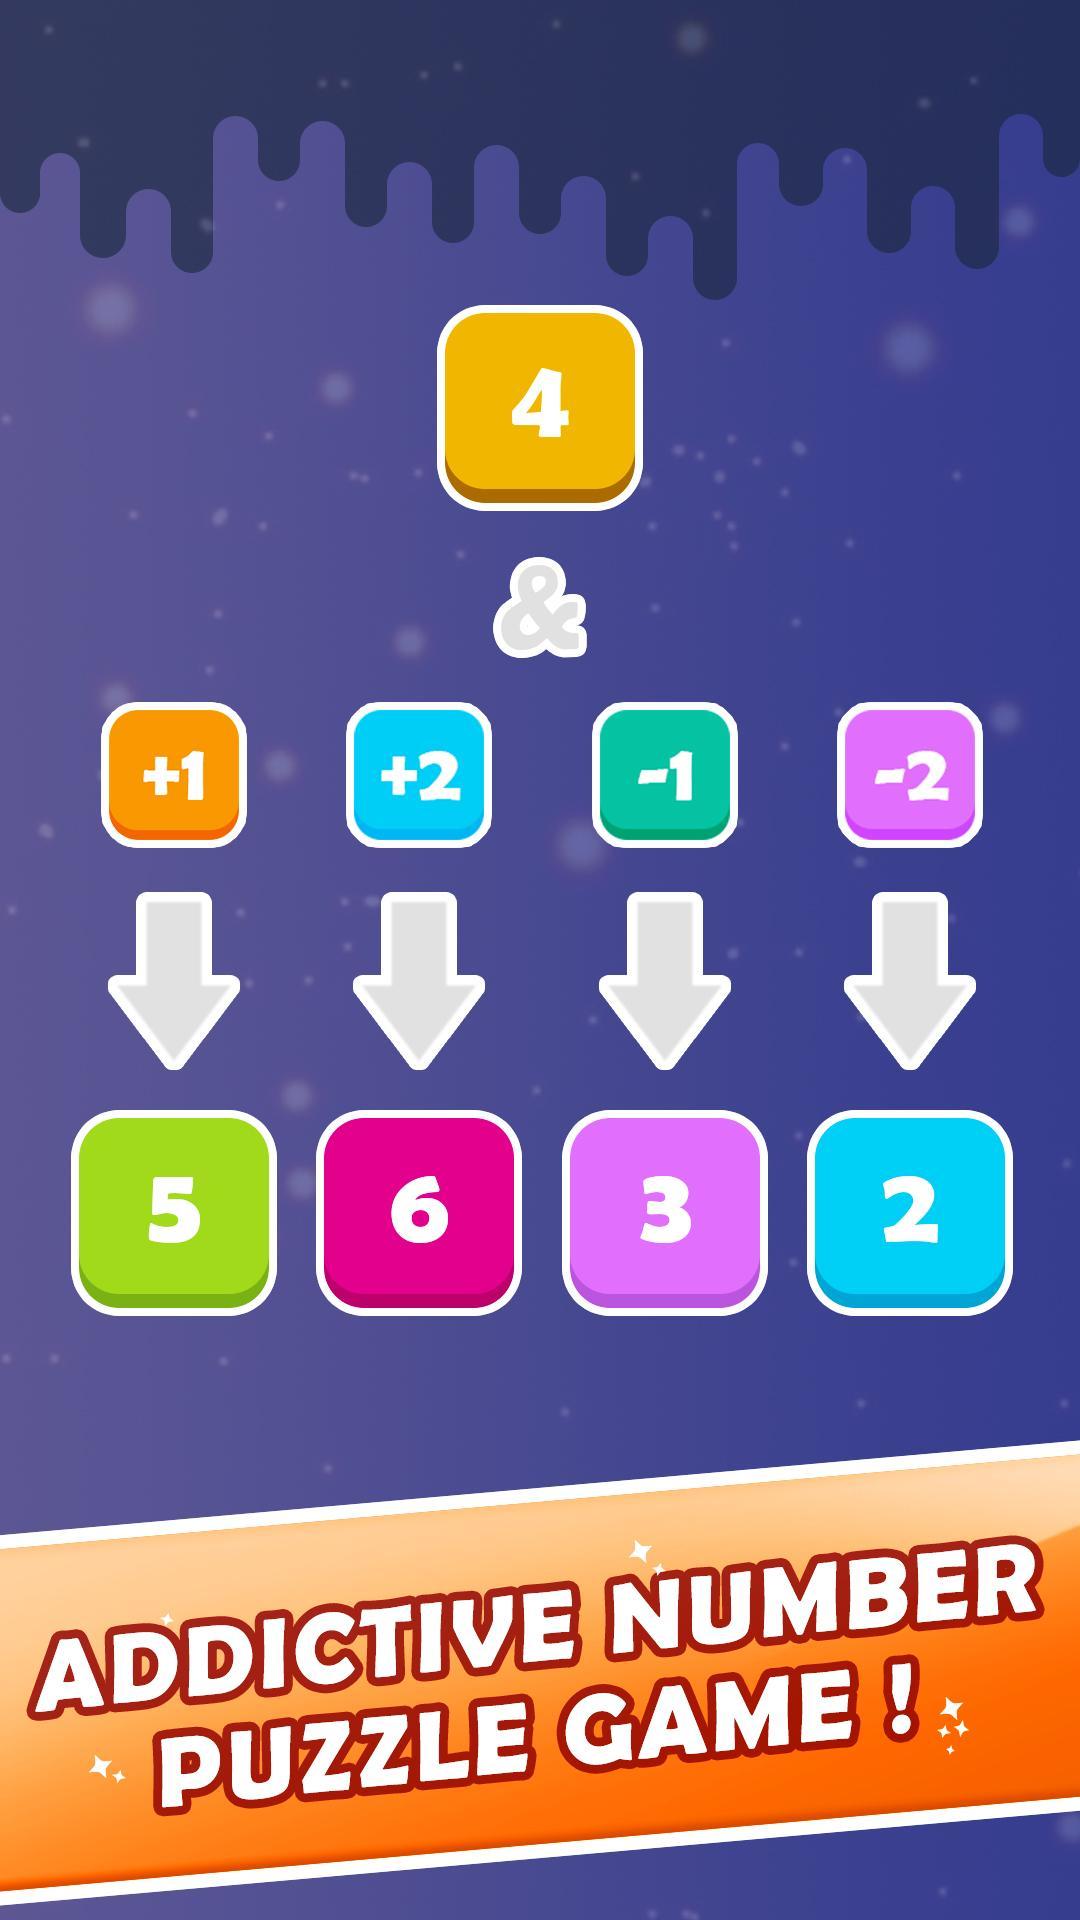 Number Blast screenshot game